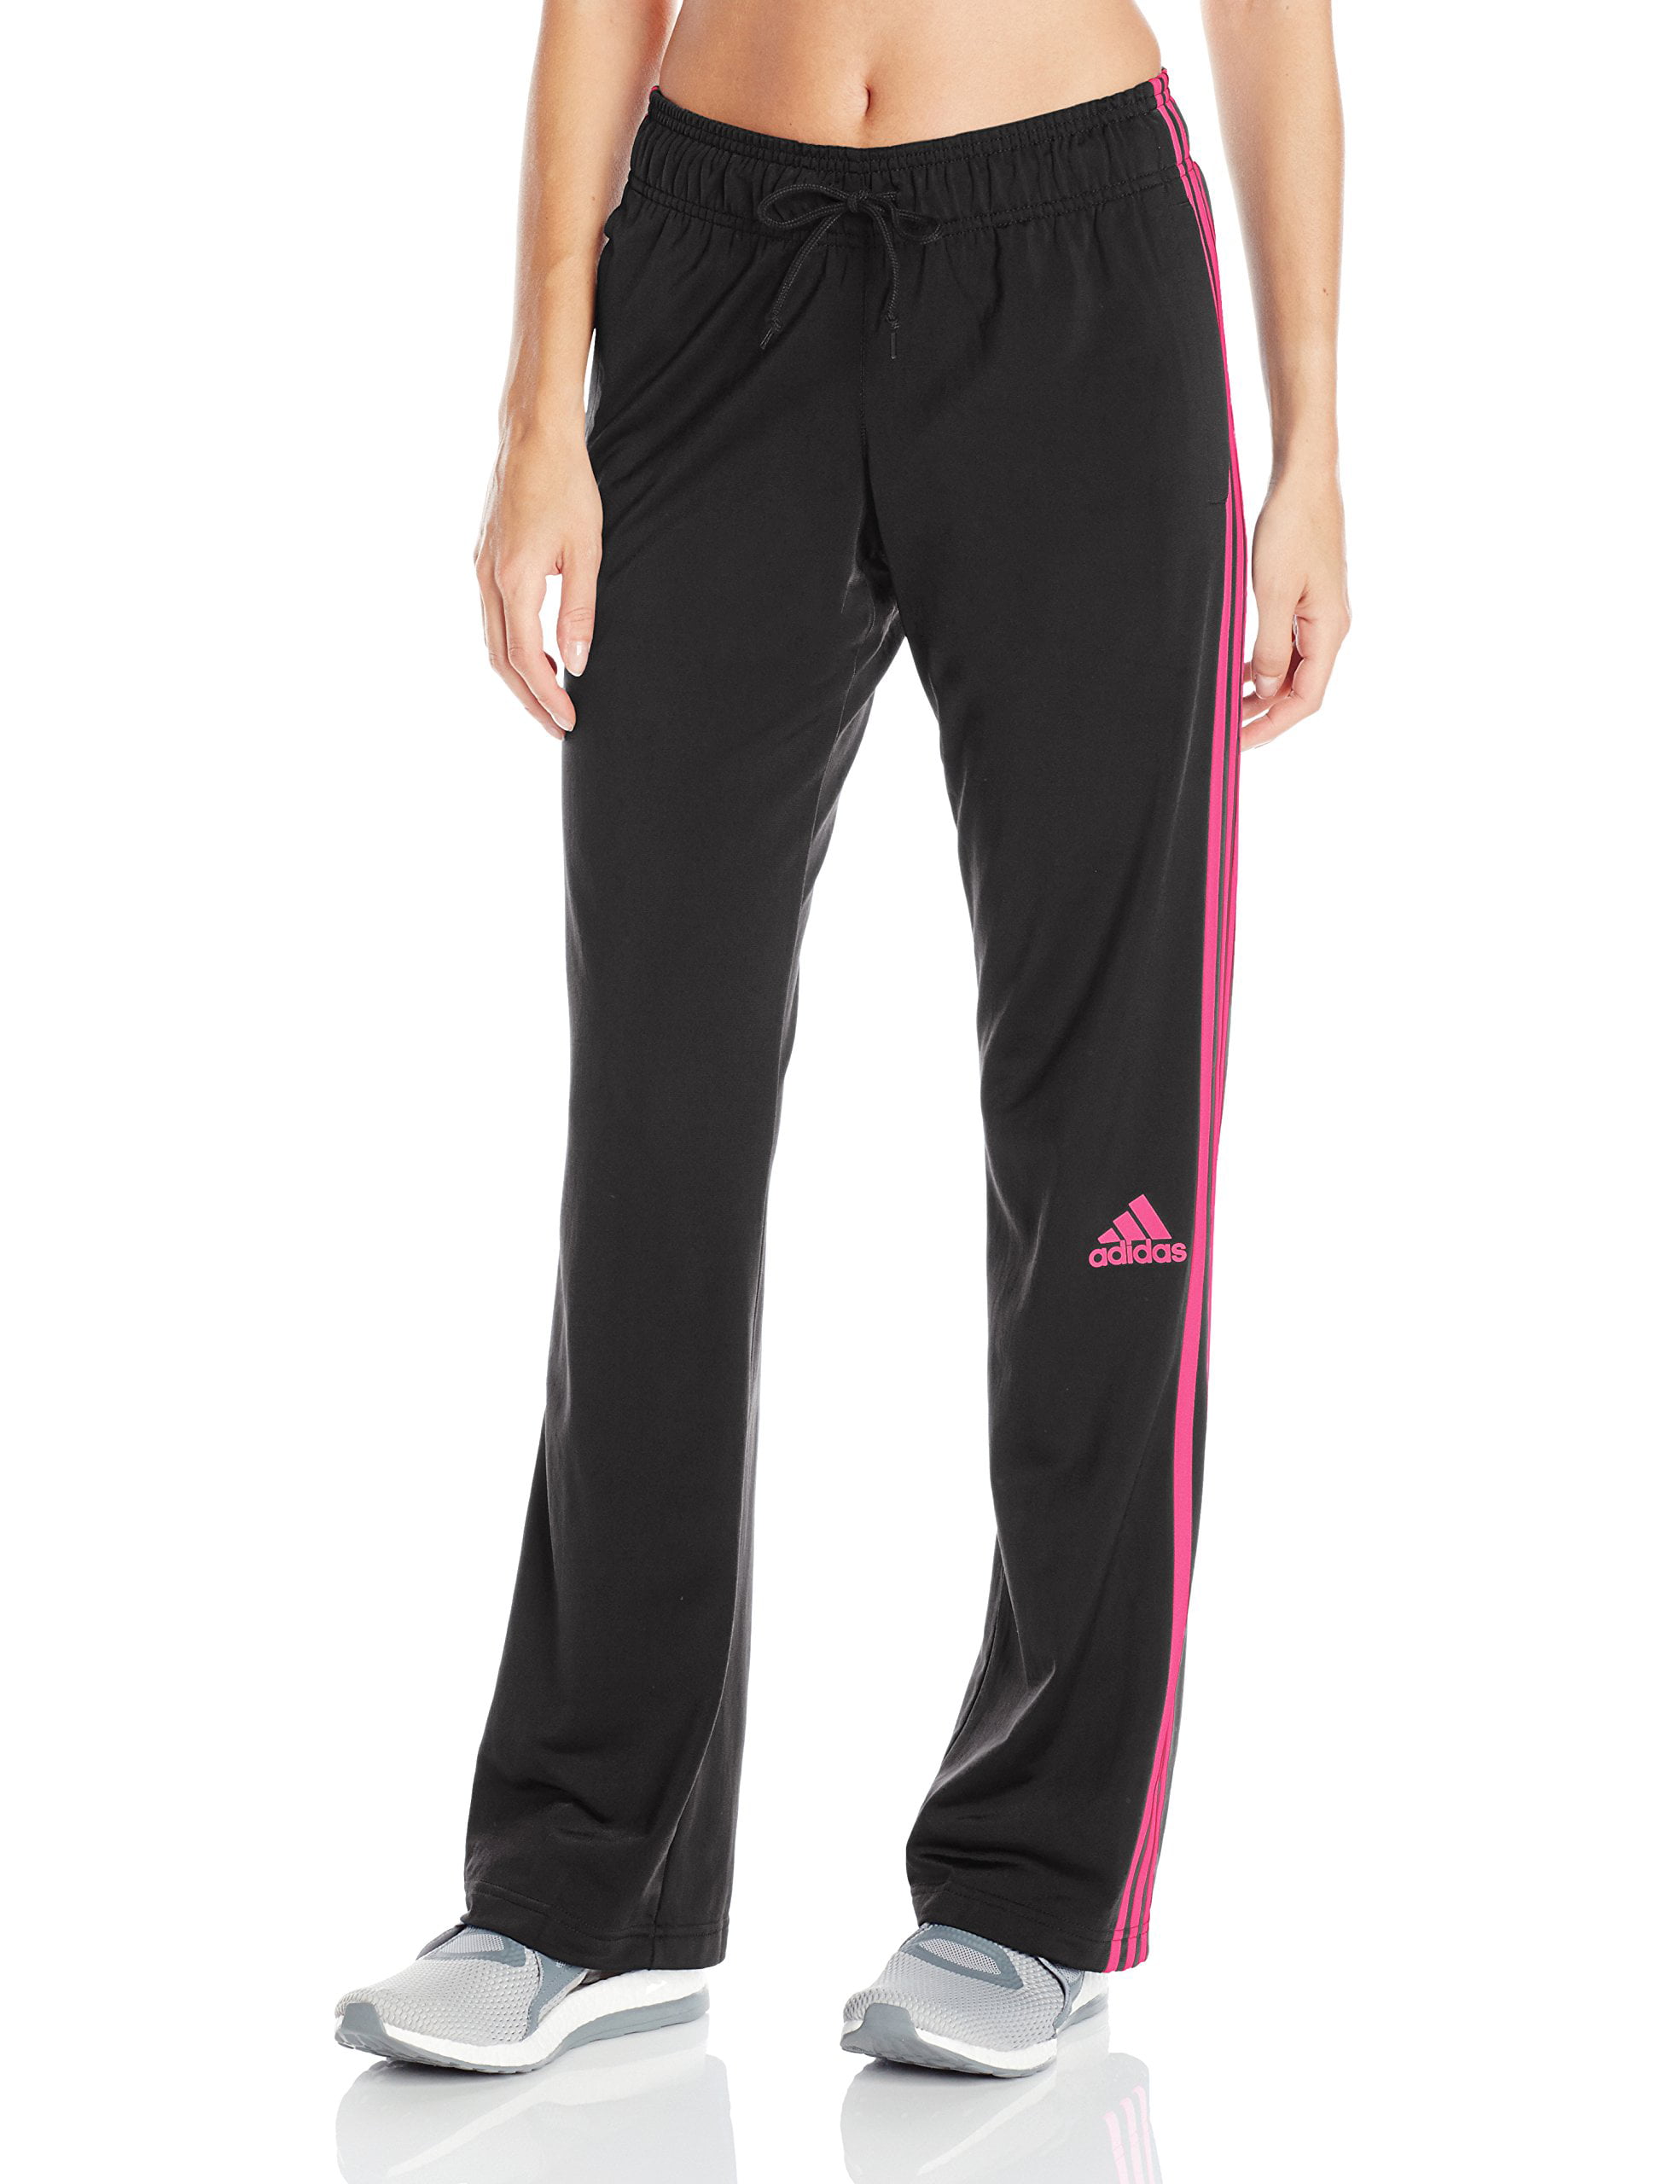 Adidas Track pants Women's Small Black Pink Pockets